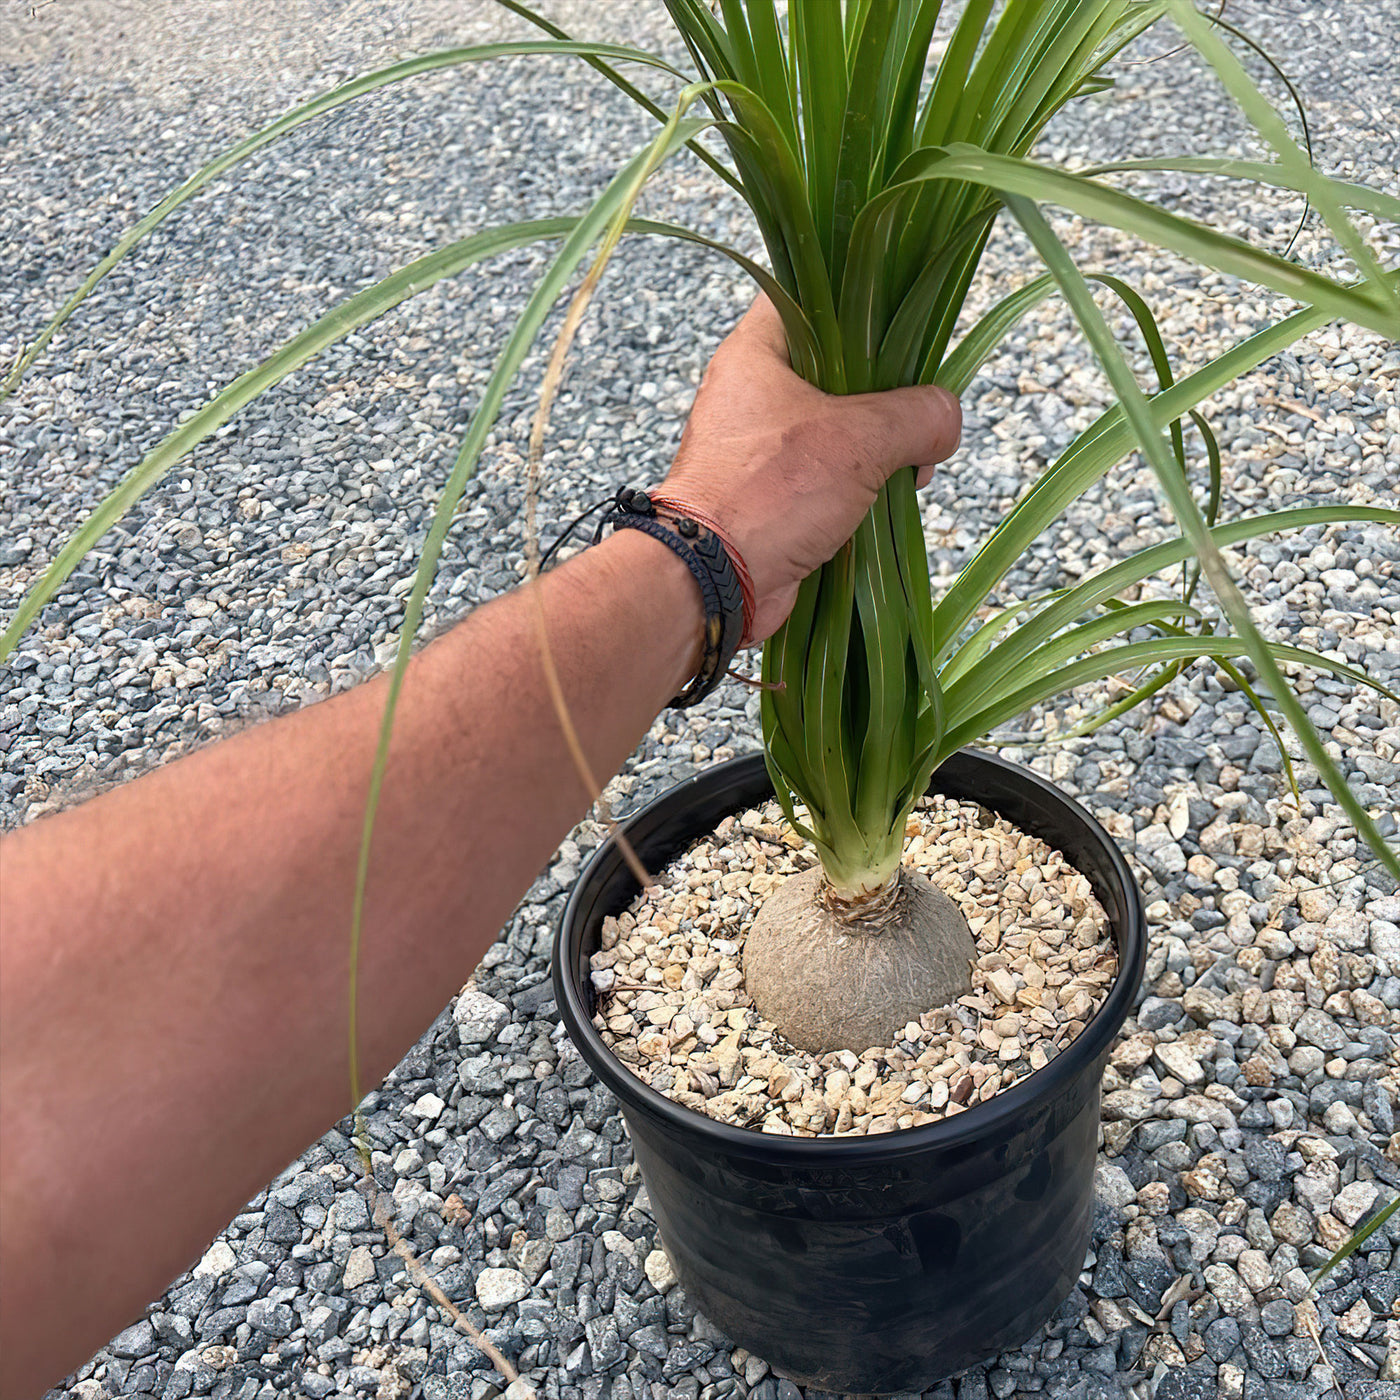 Ponytail palm 'Beaucarnea Recurvata'